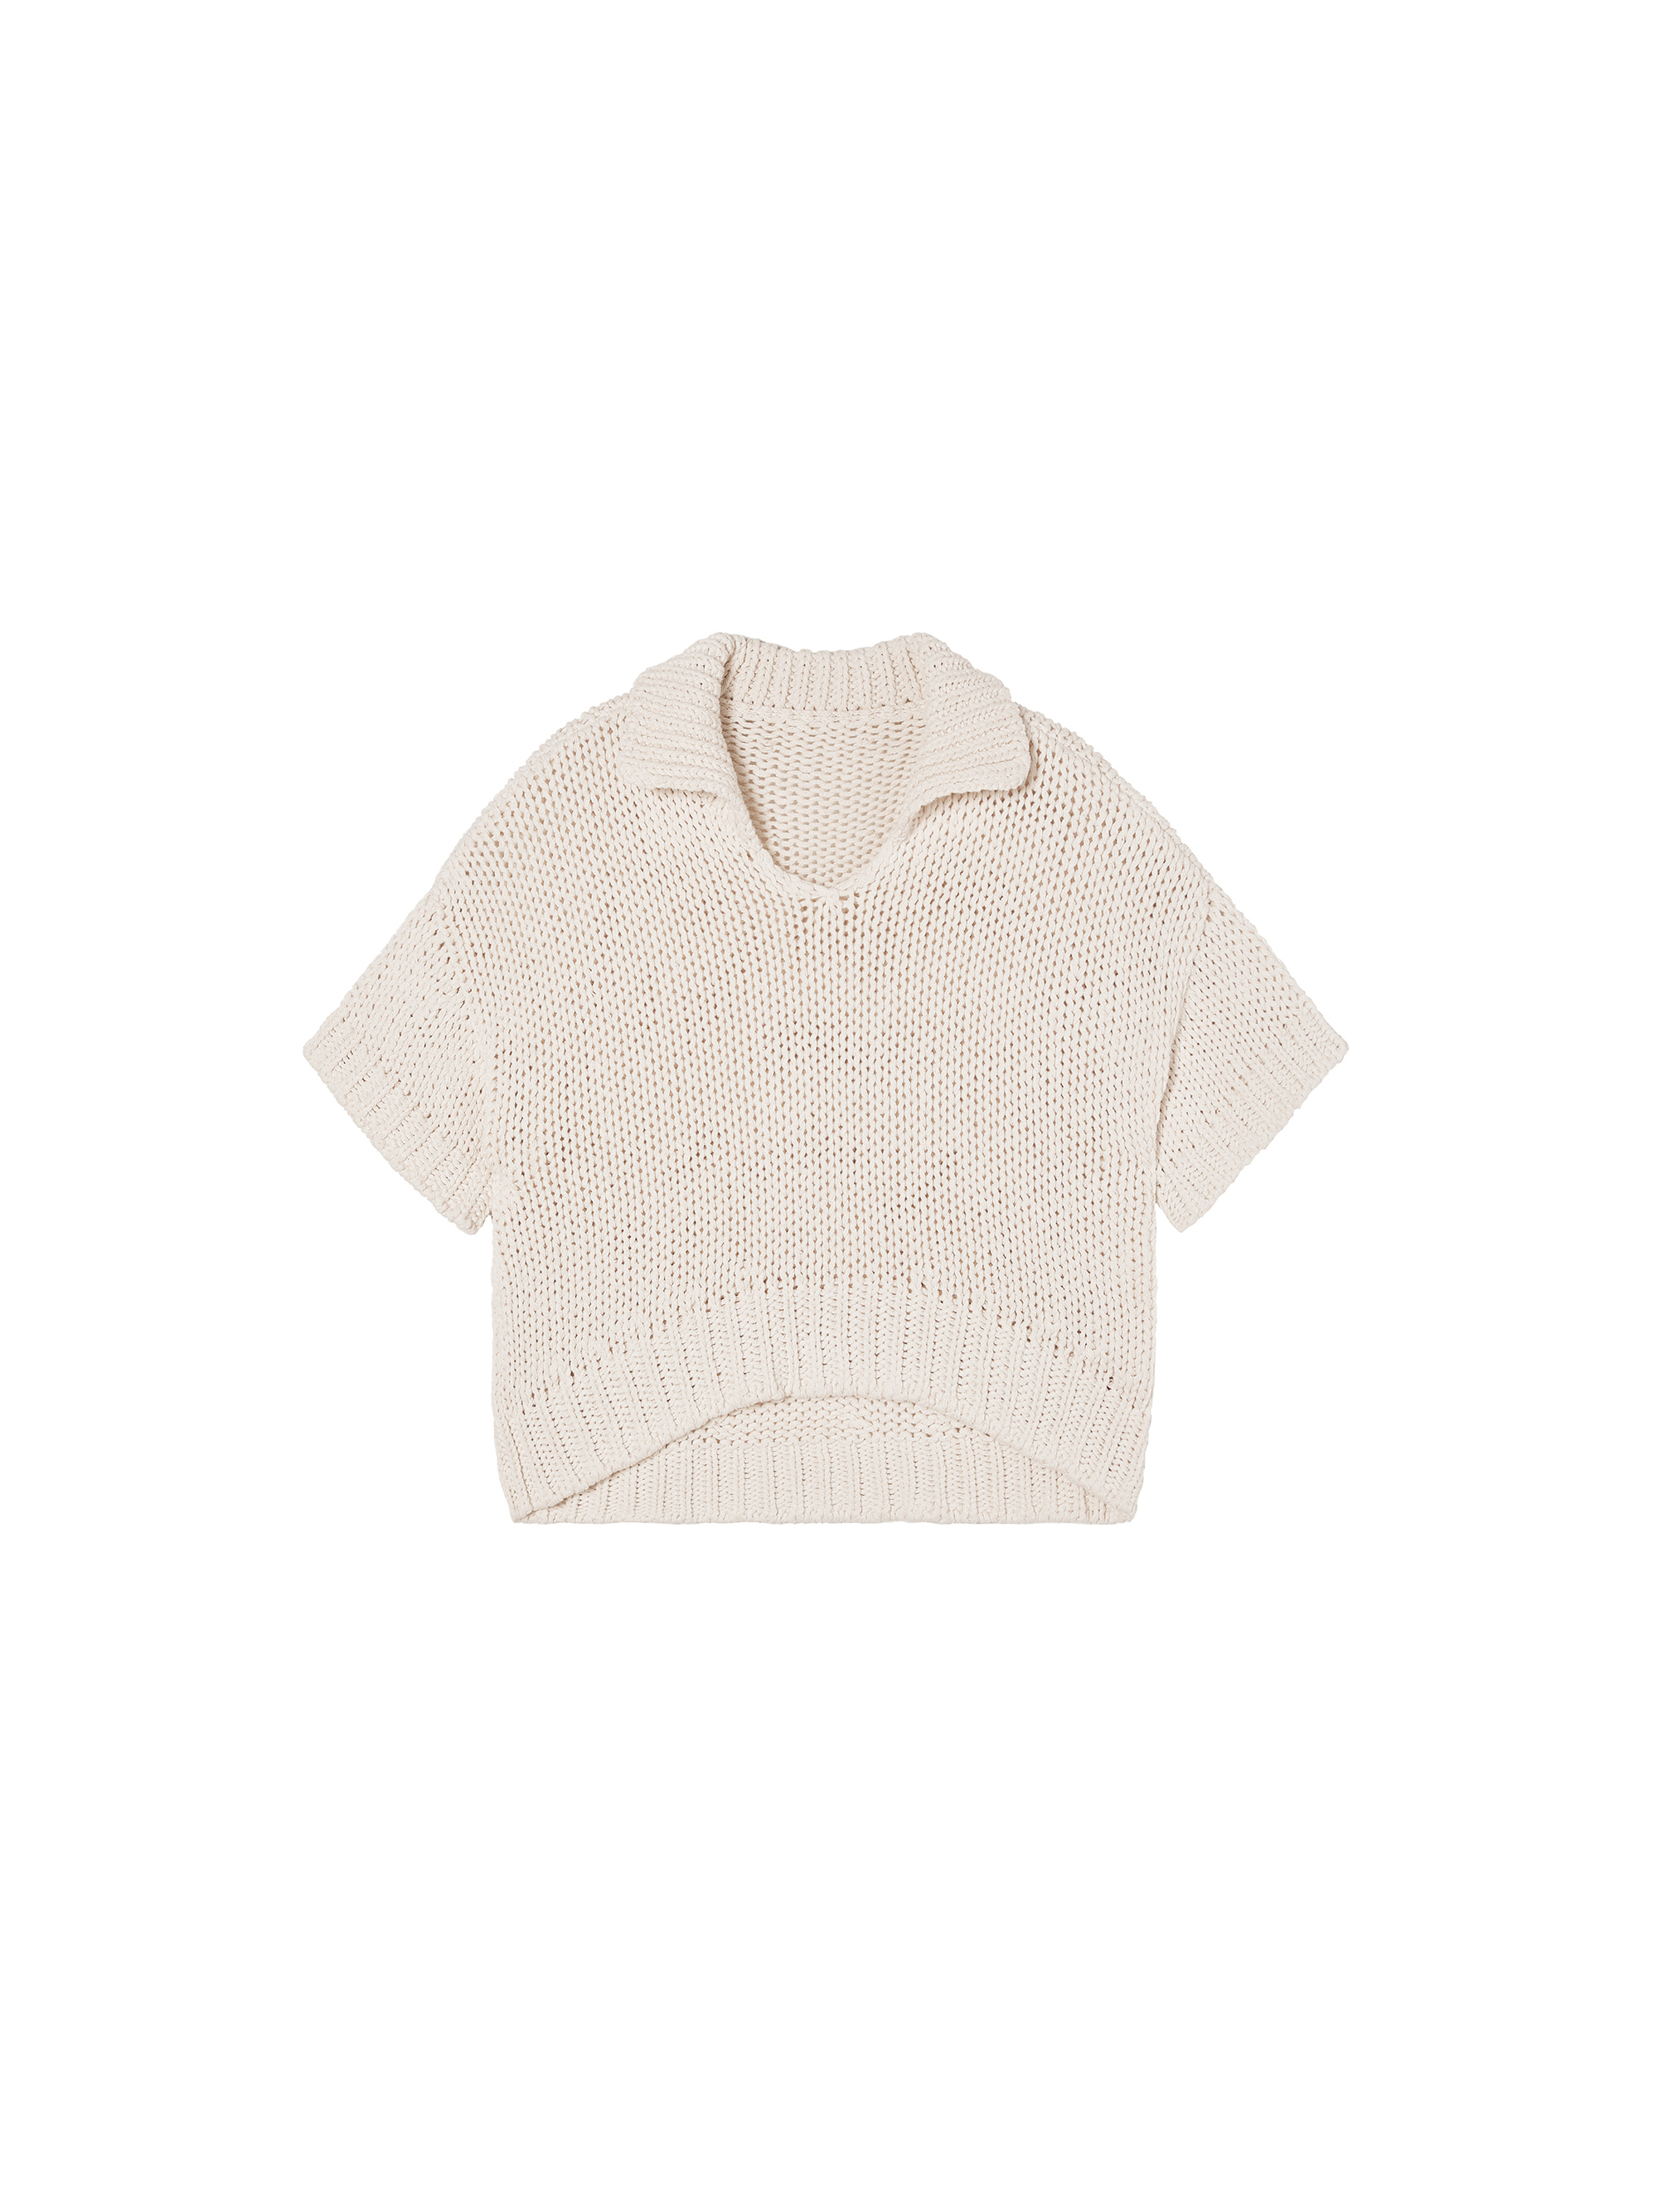 Half-sleeve Cropped Sweater / 하프-슬리브 크롭 스웨터